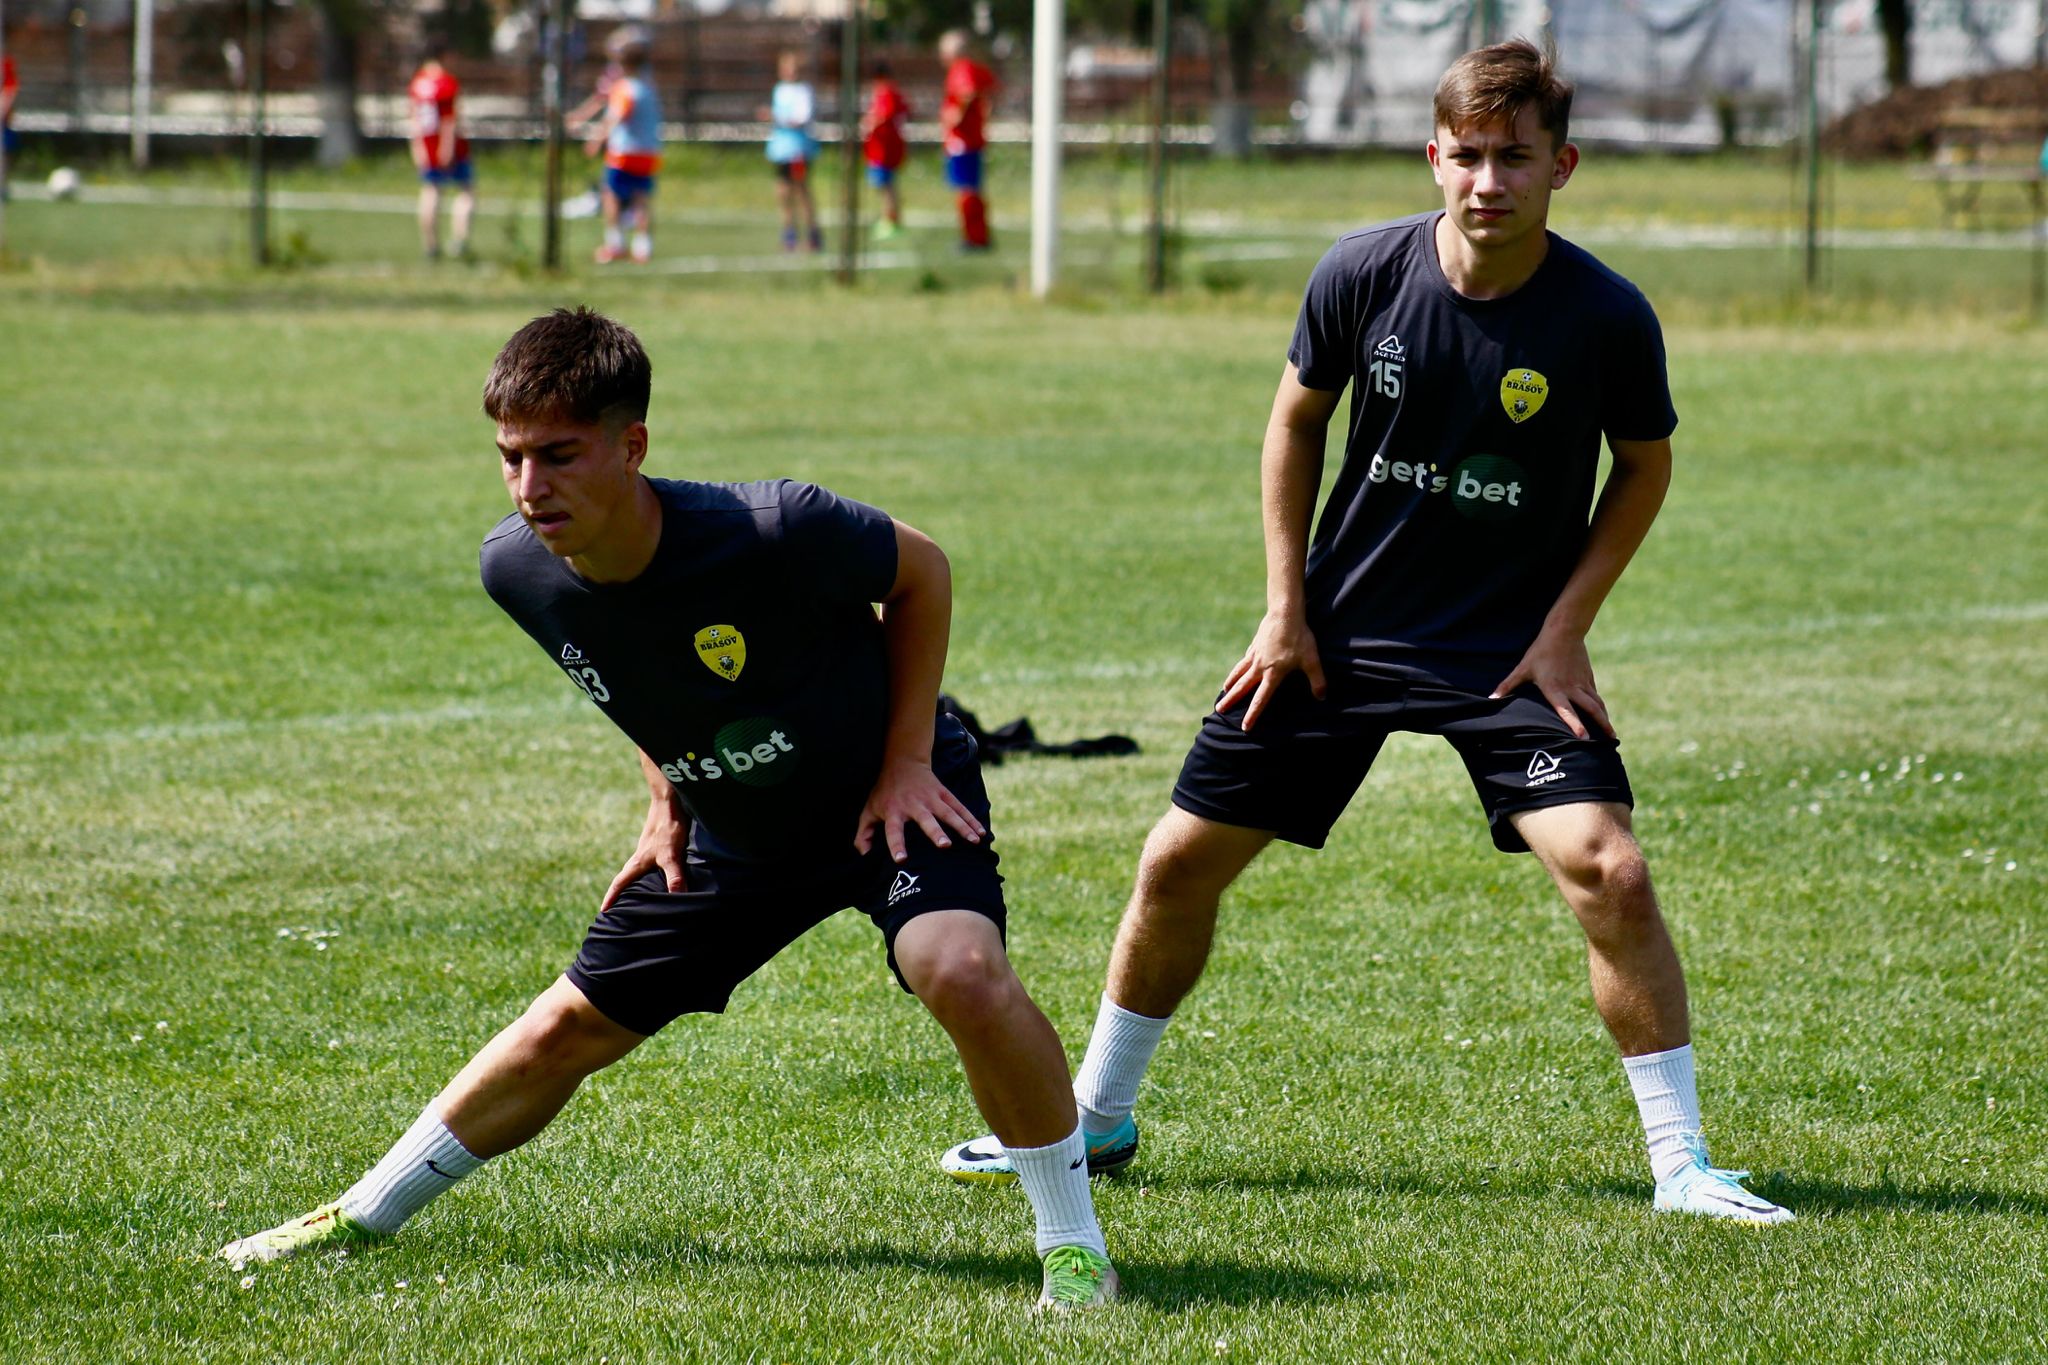 Meciuri-test utile pentru FC Brașov, cu adversari superiori